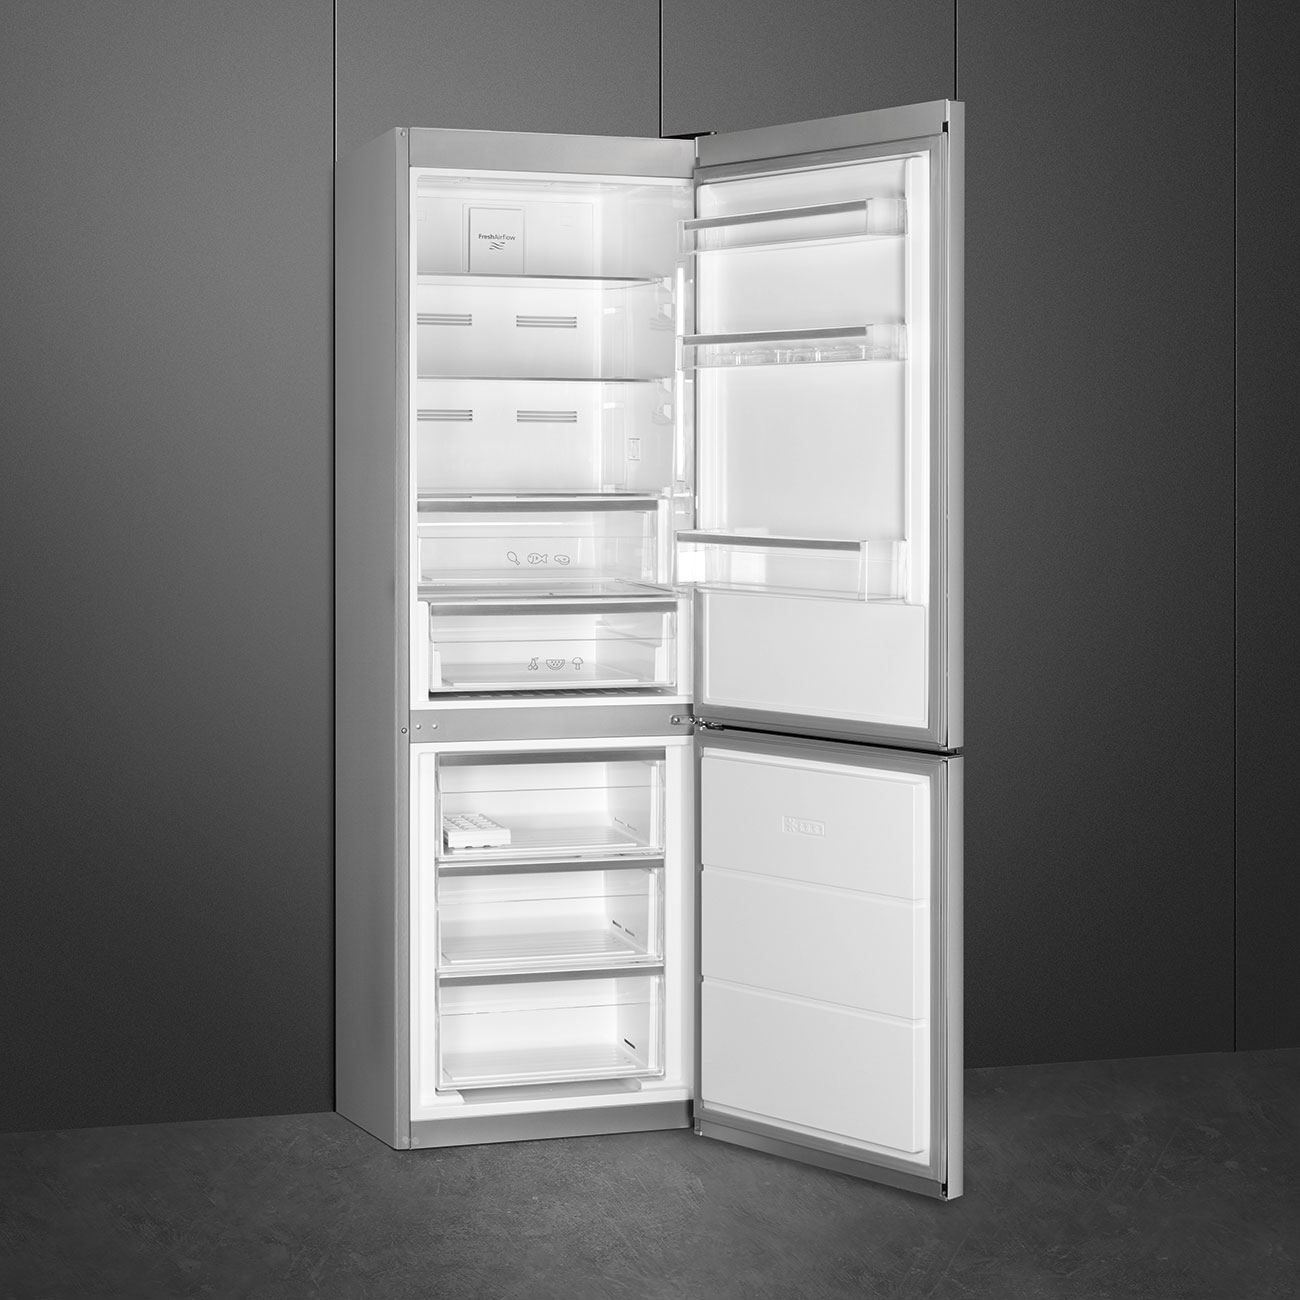 Bottom Mount Free standing refrigerator - Smeg_2